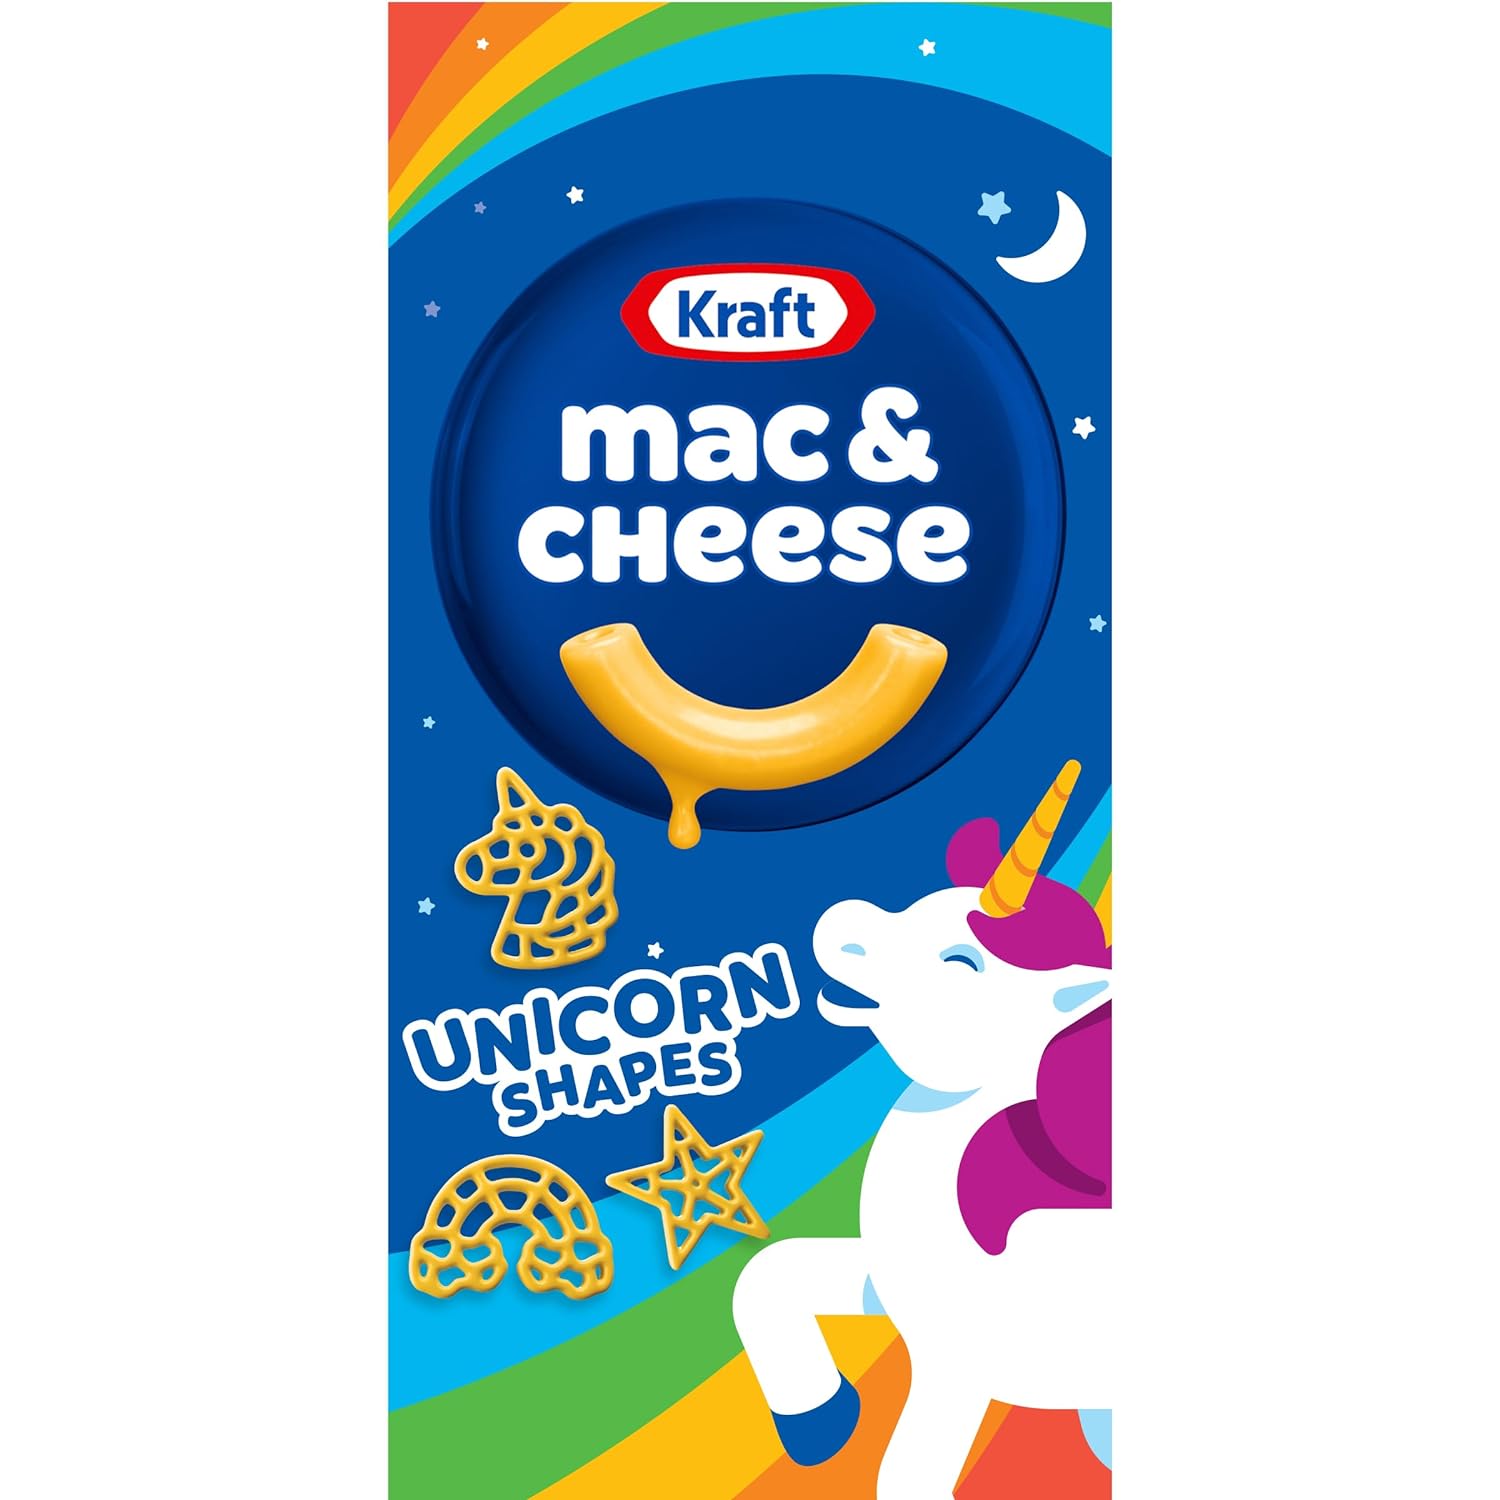 Kraft Macaroni & Cheese Unicorn Shapes Dinner (5.5 oz Box)